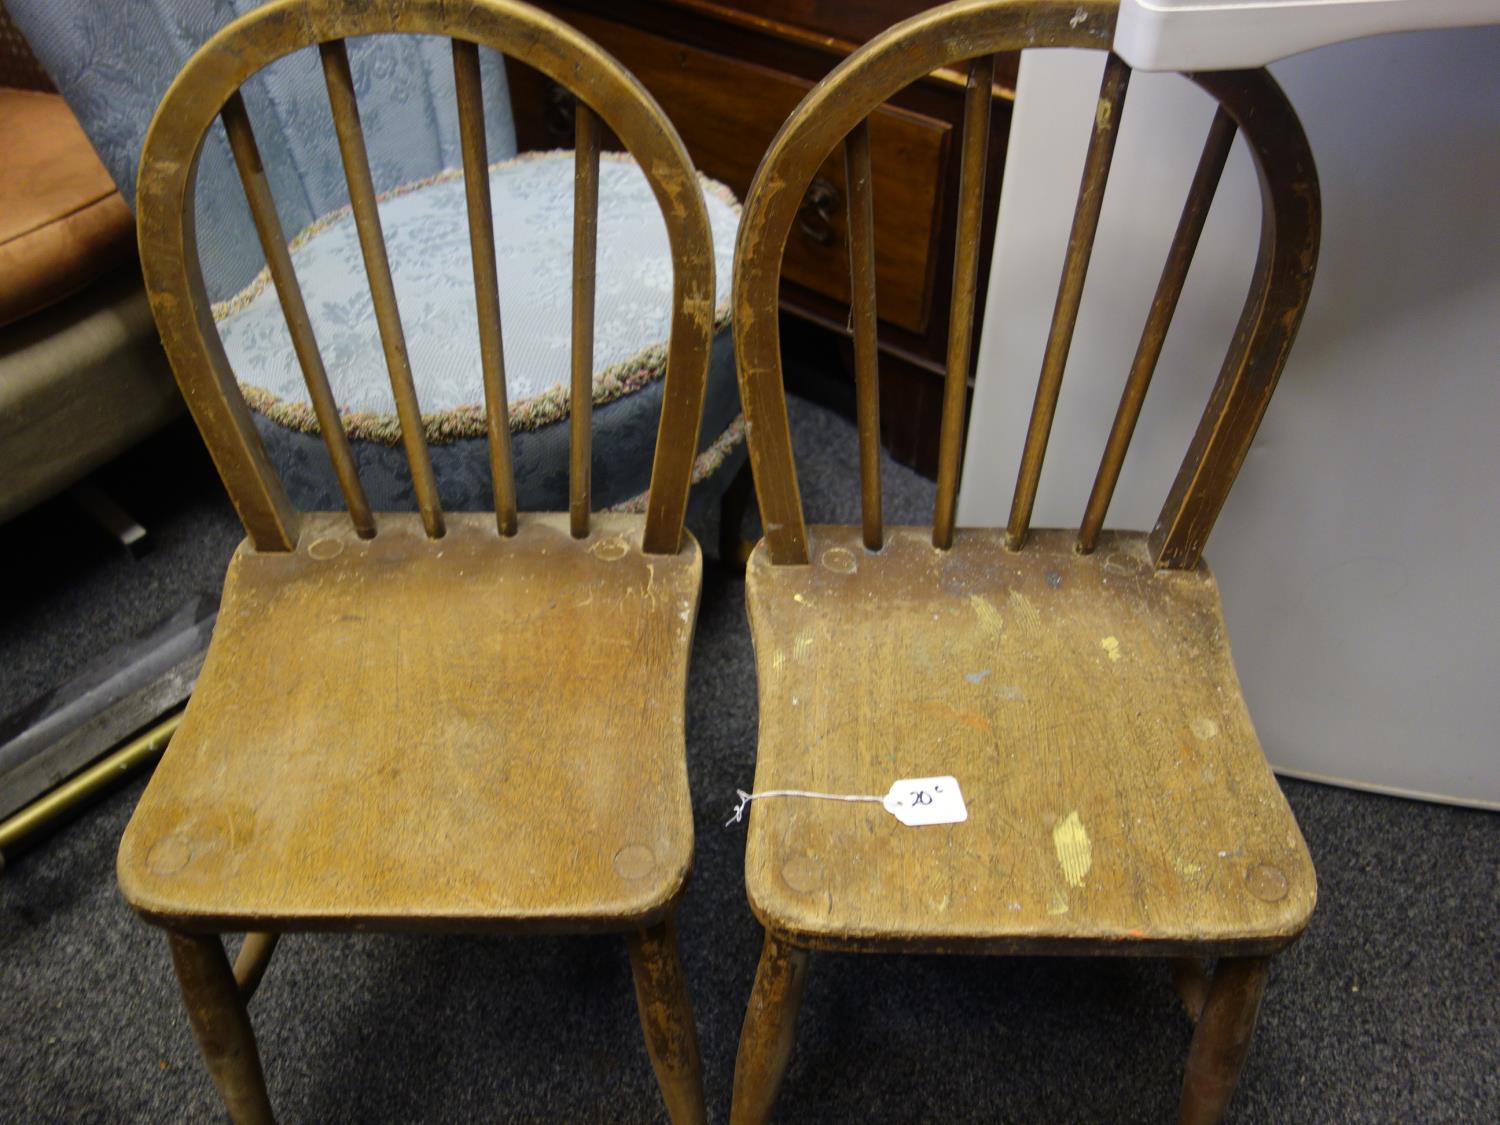 2 x similar nursery school wooden children's chair, both c1940's-50's Suffolk Windsor design,